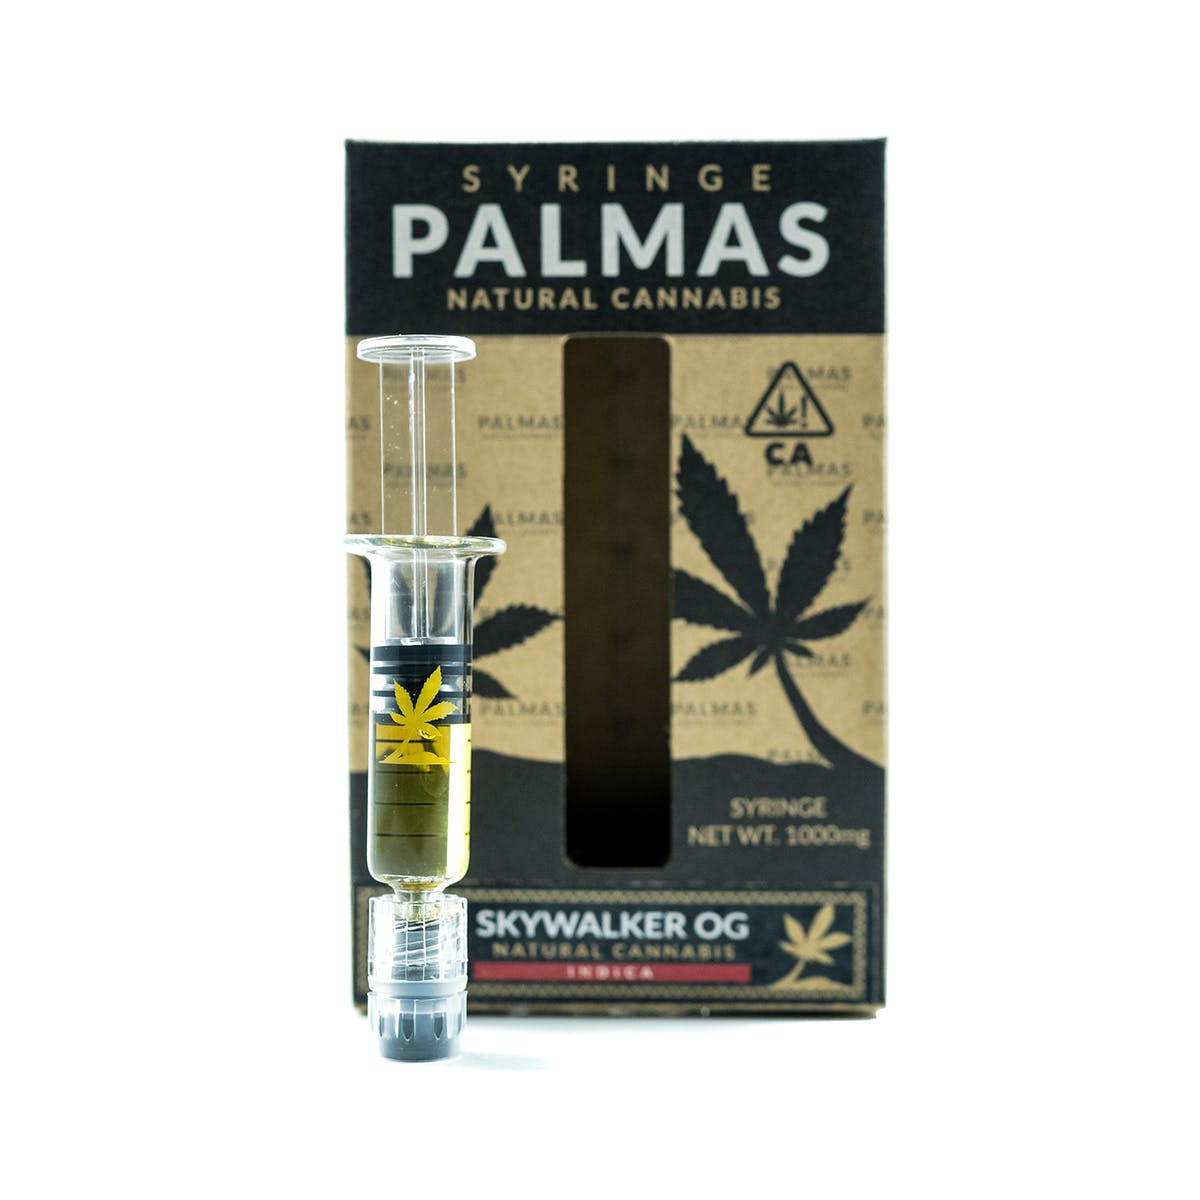 marijuana-dispensaries-og-florence-25-cap-in-los-angeles-palmas-syringe-skywalker-og-1000mg